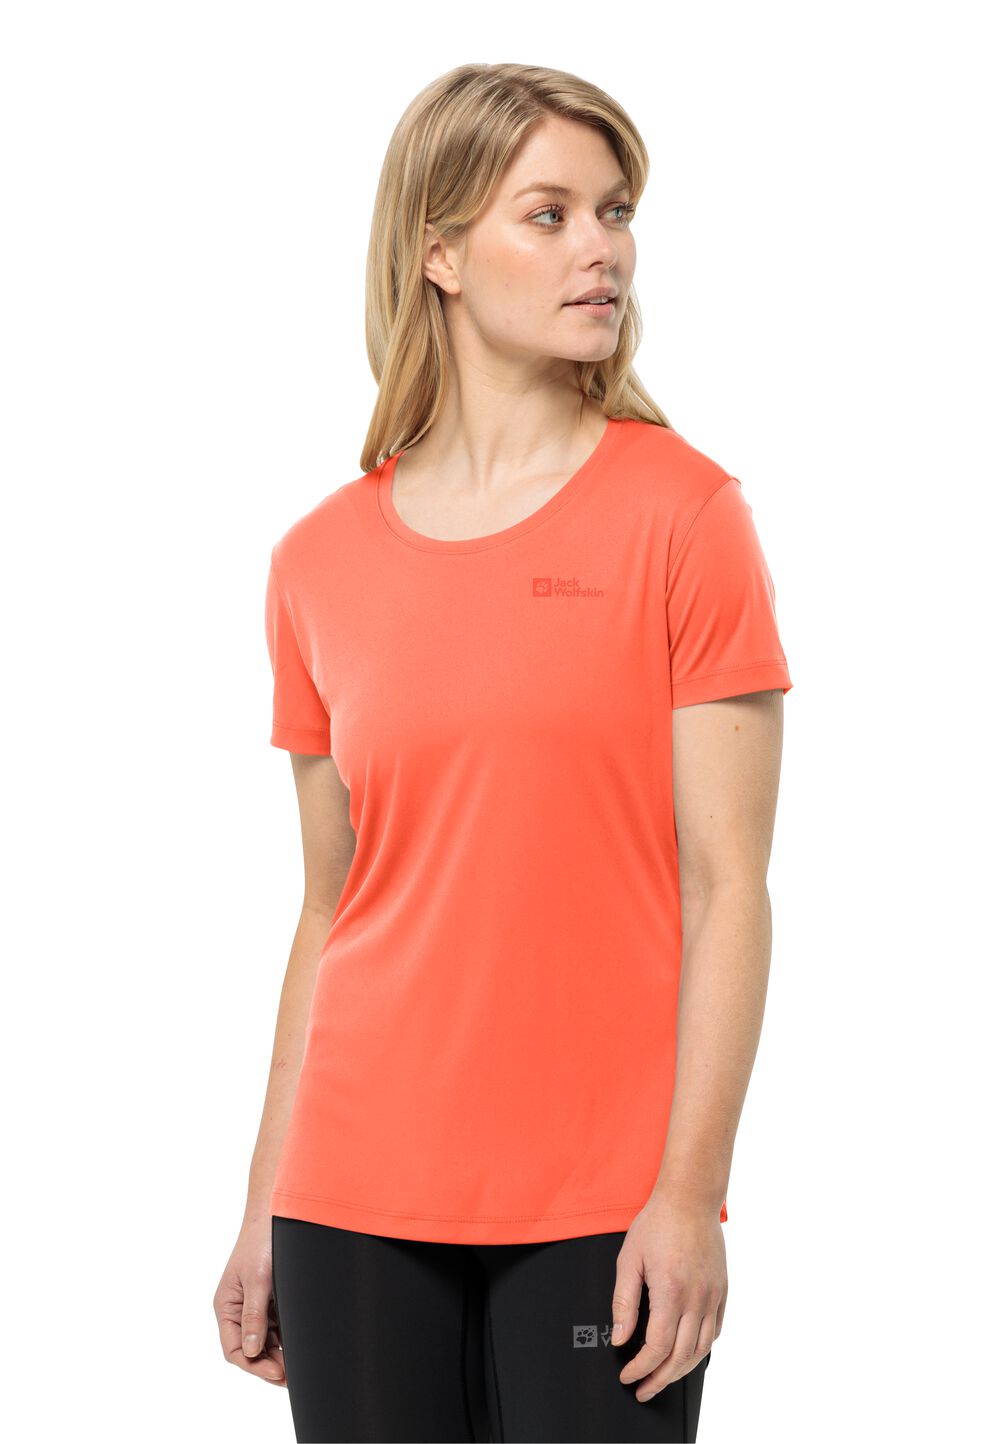 Jack Wolfskin Tech T-Shirt Women Functioneel shirt Dames S rood digital orange